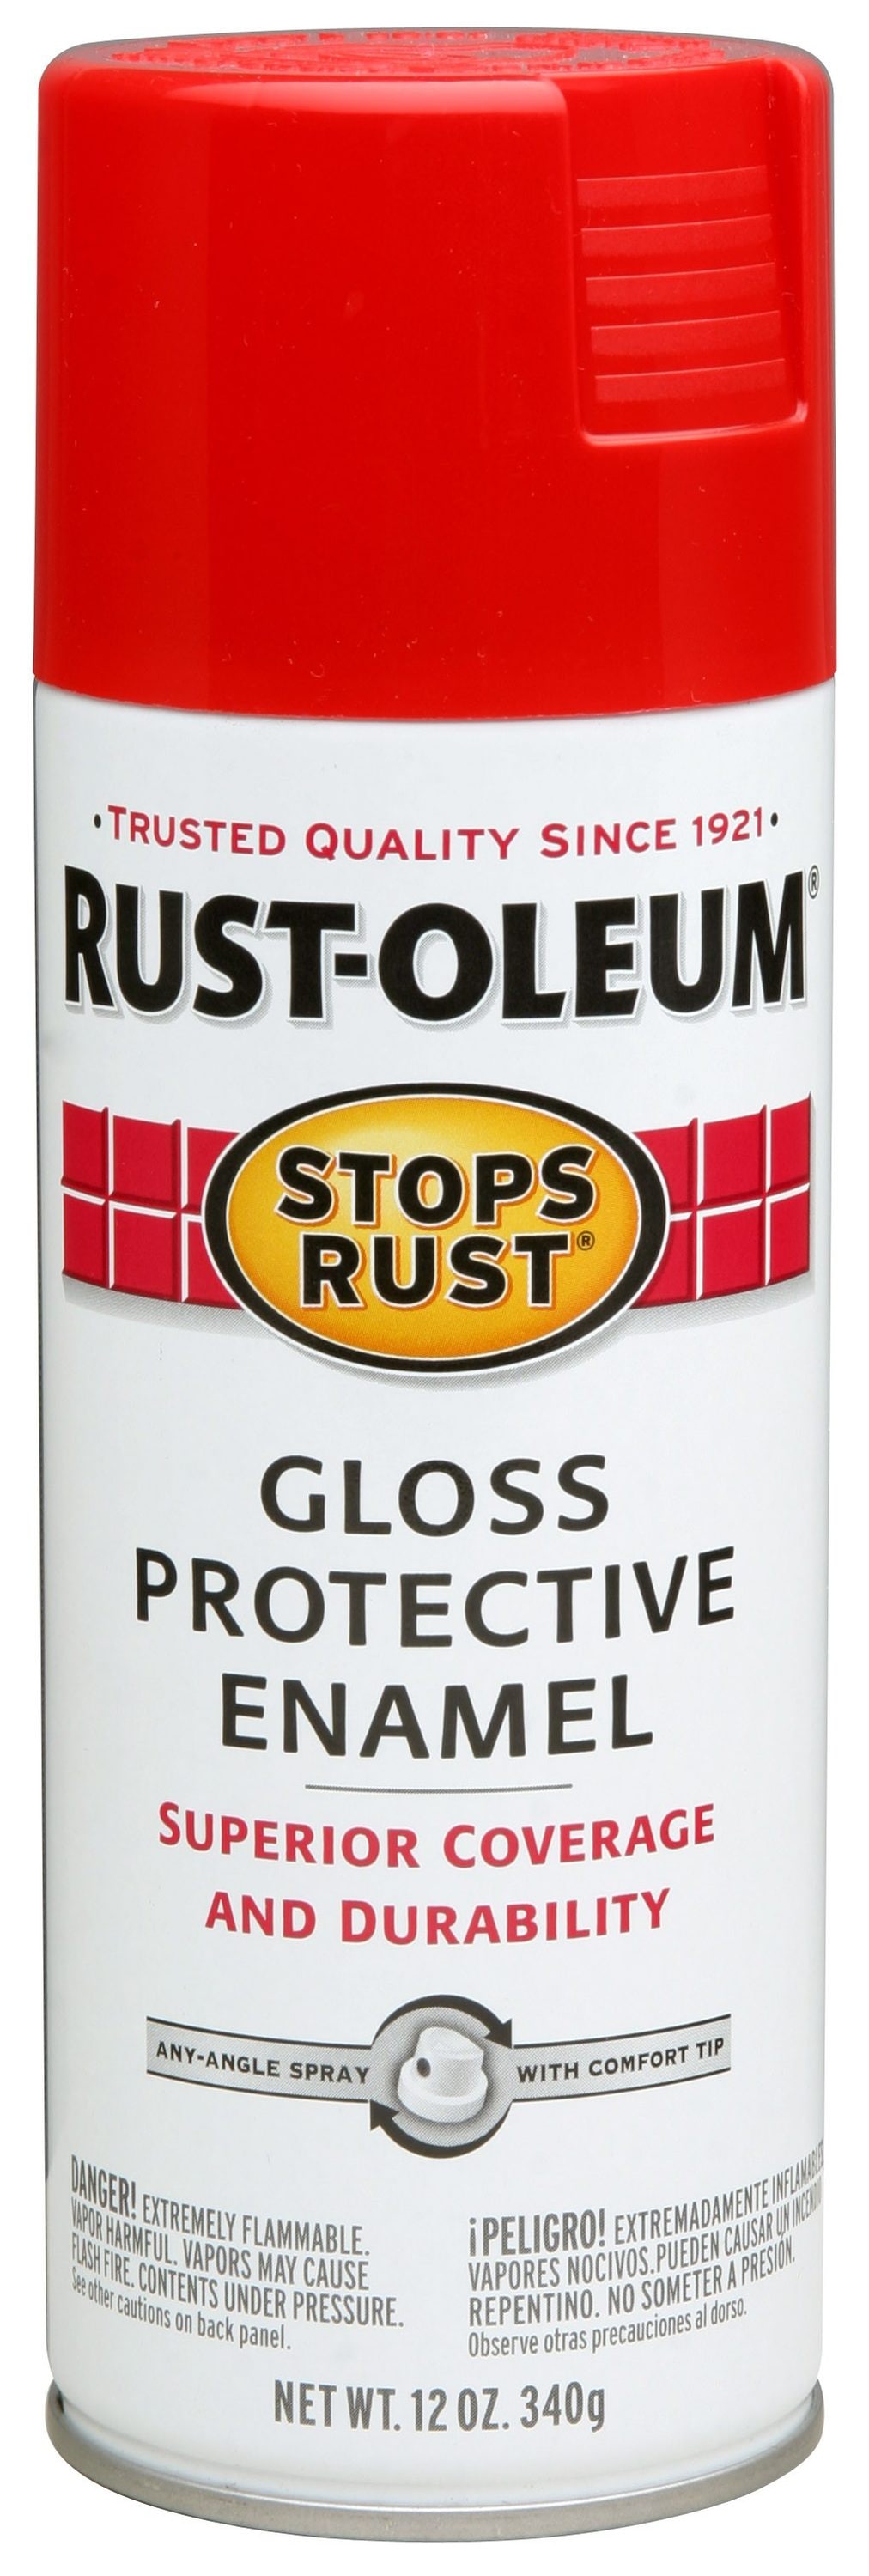 Rust-Oleum Painter's Touch 2X Ultra Cover 12 Oz. Satin Paint + Primer Spray  Paint, Lagoon - Carr Hardware